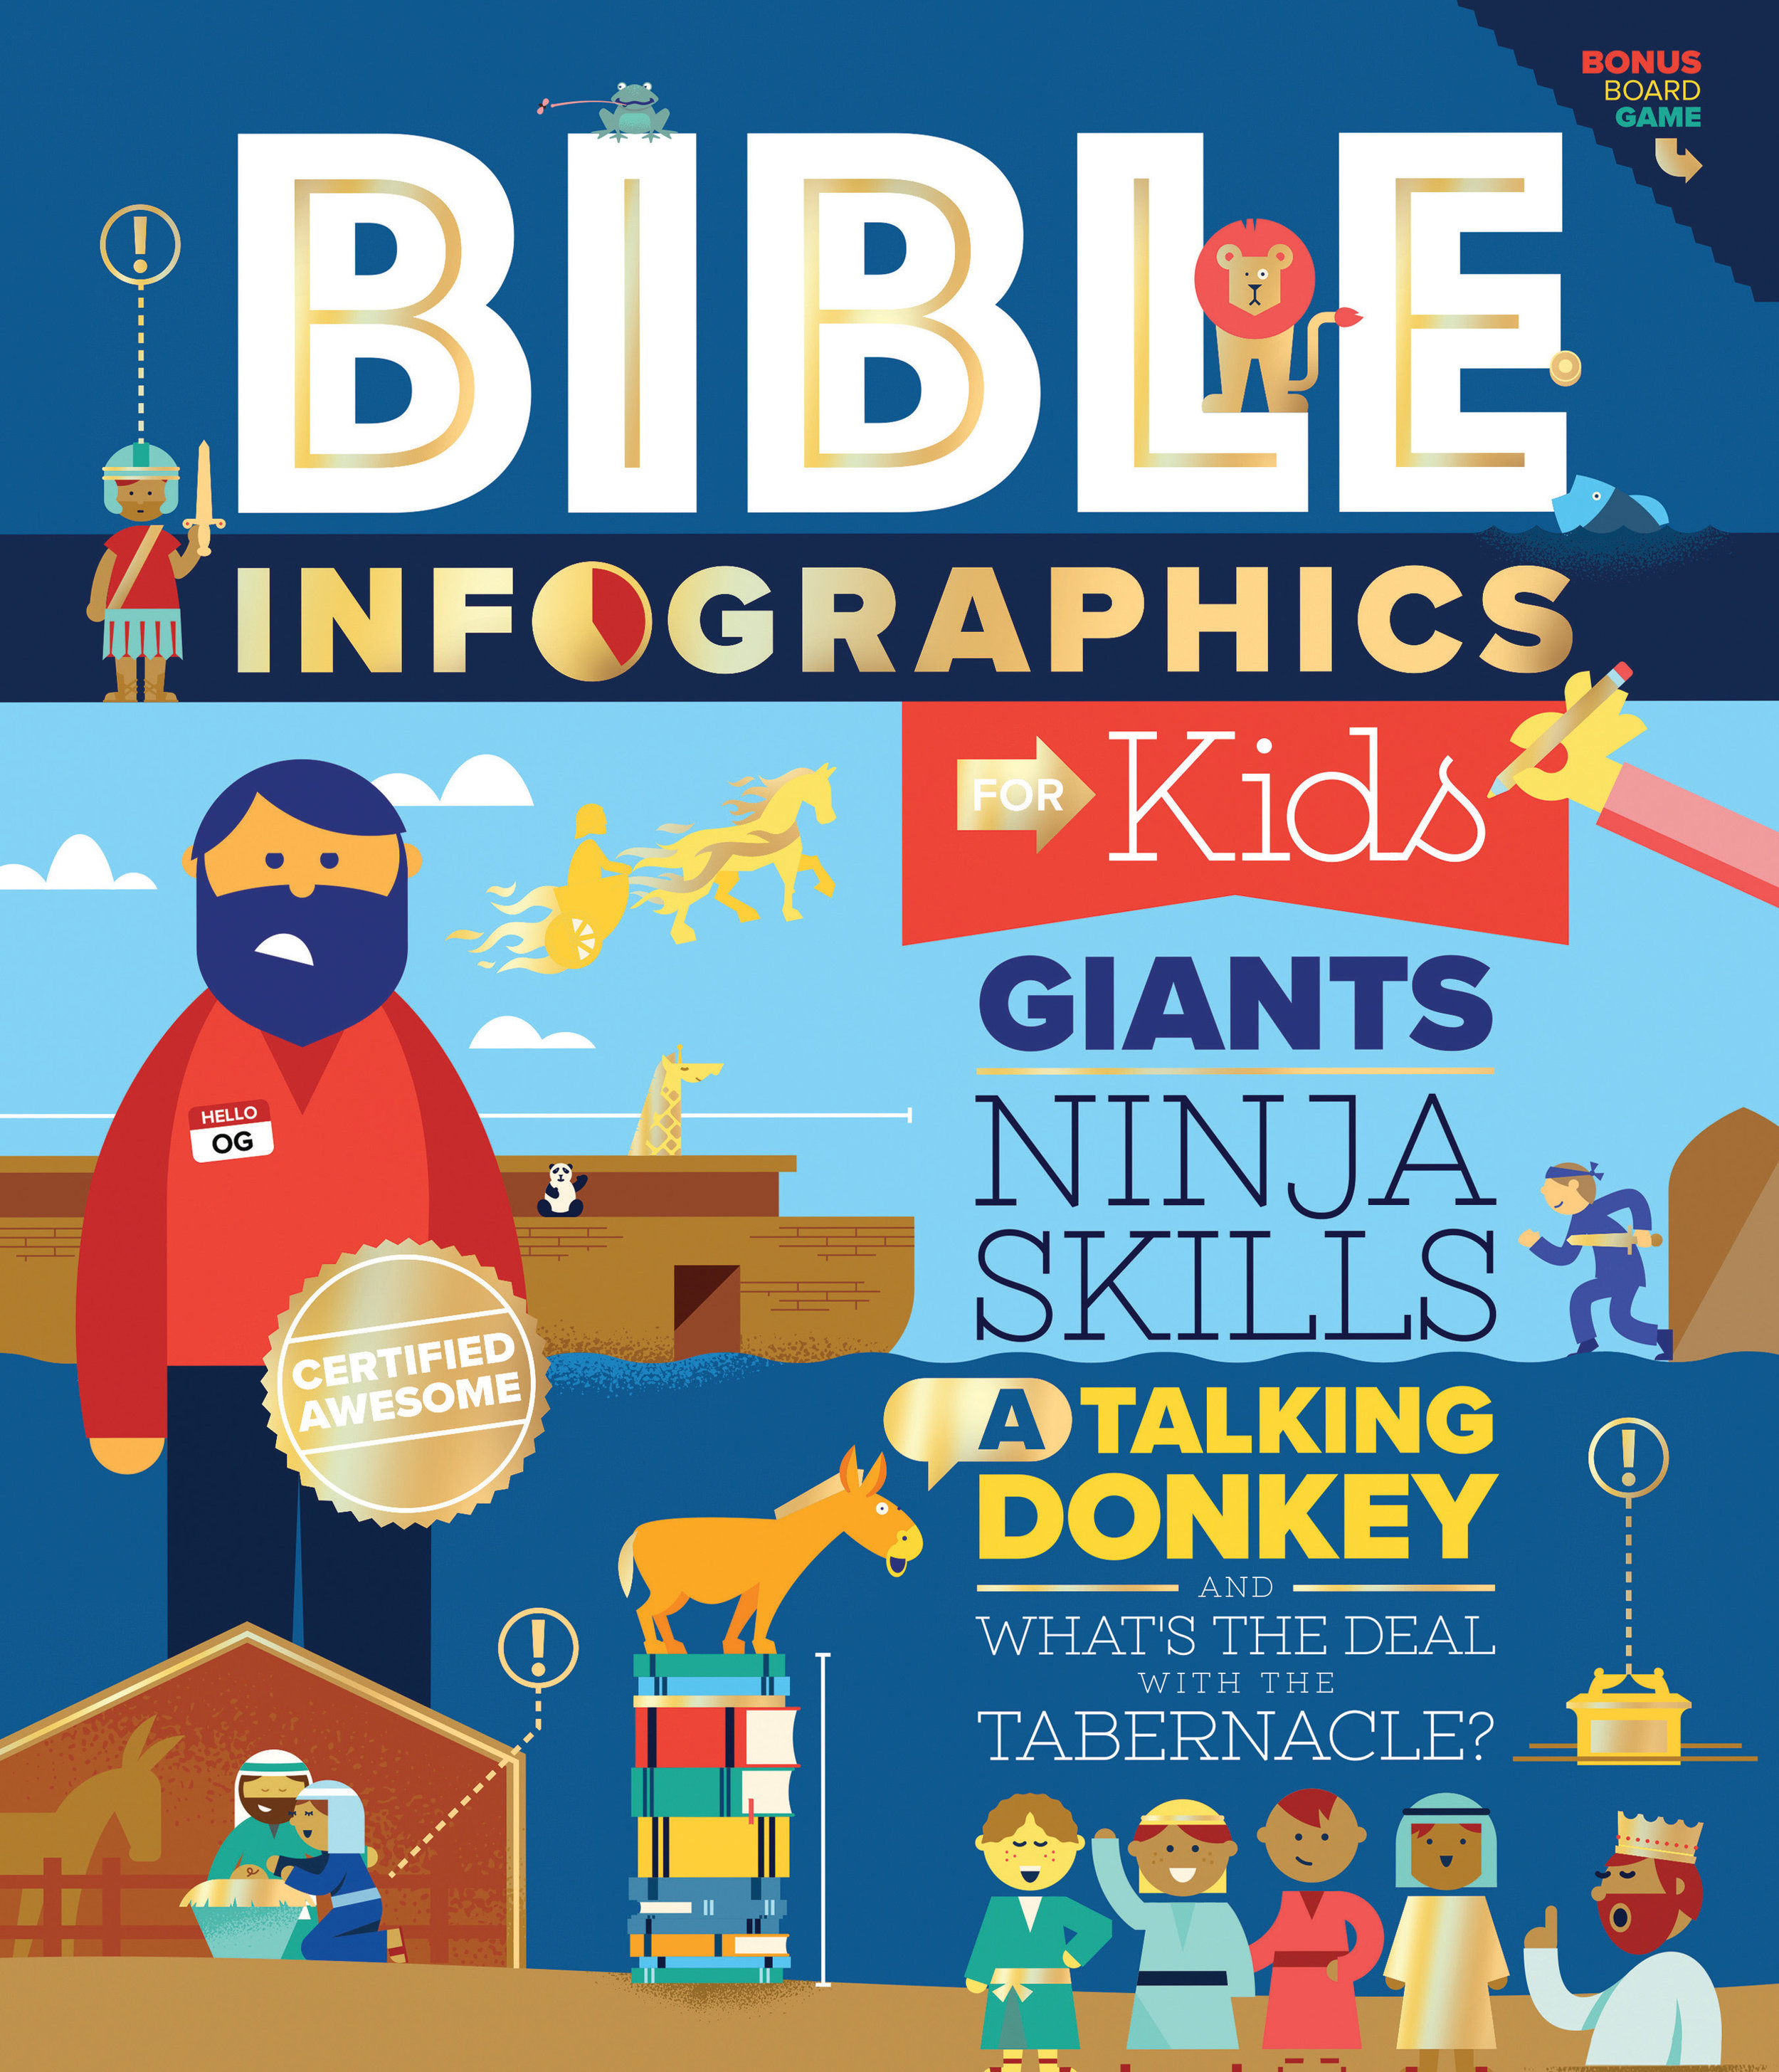 BibleInfographics_cover.jpg